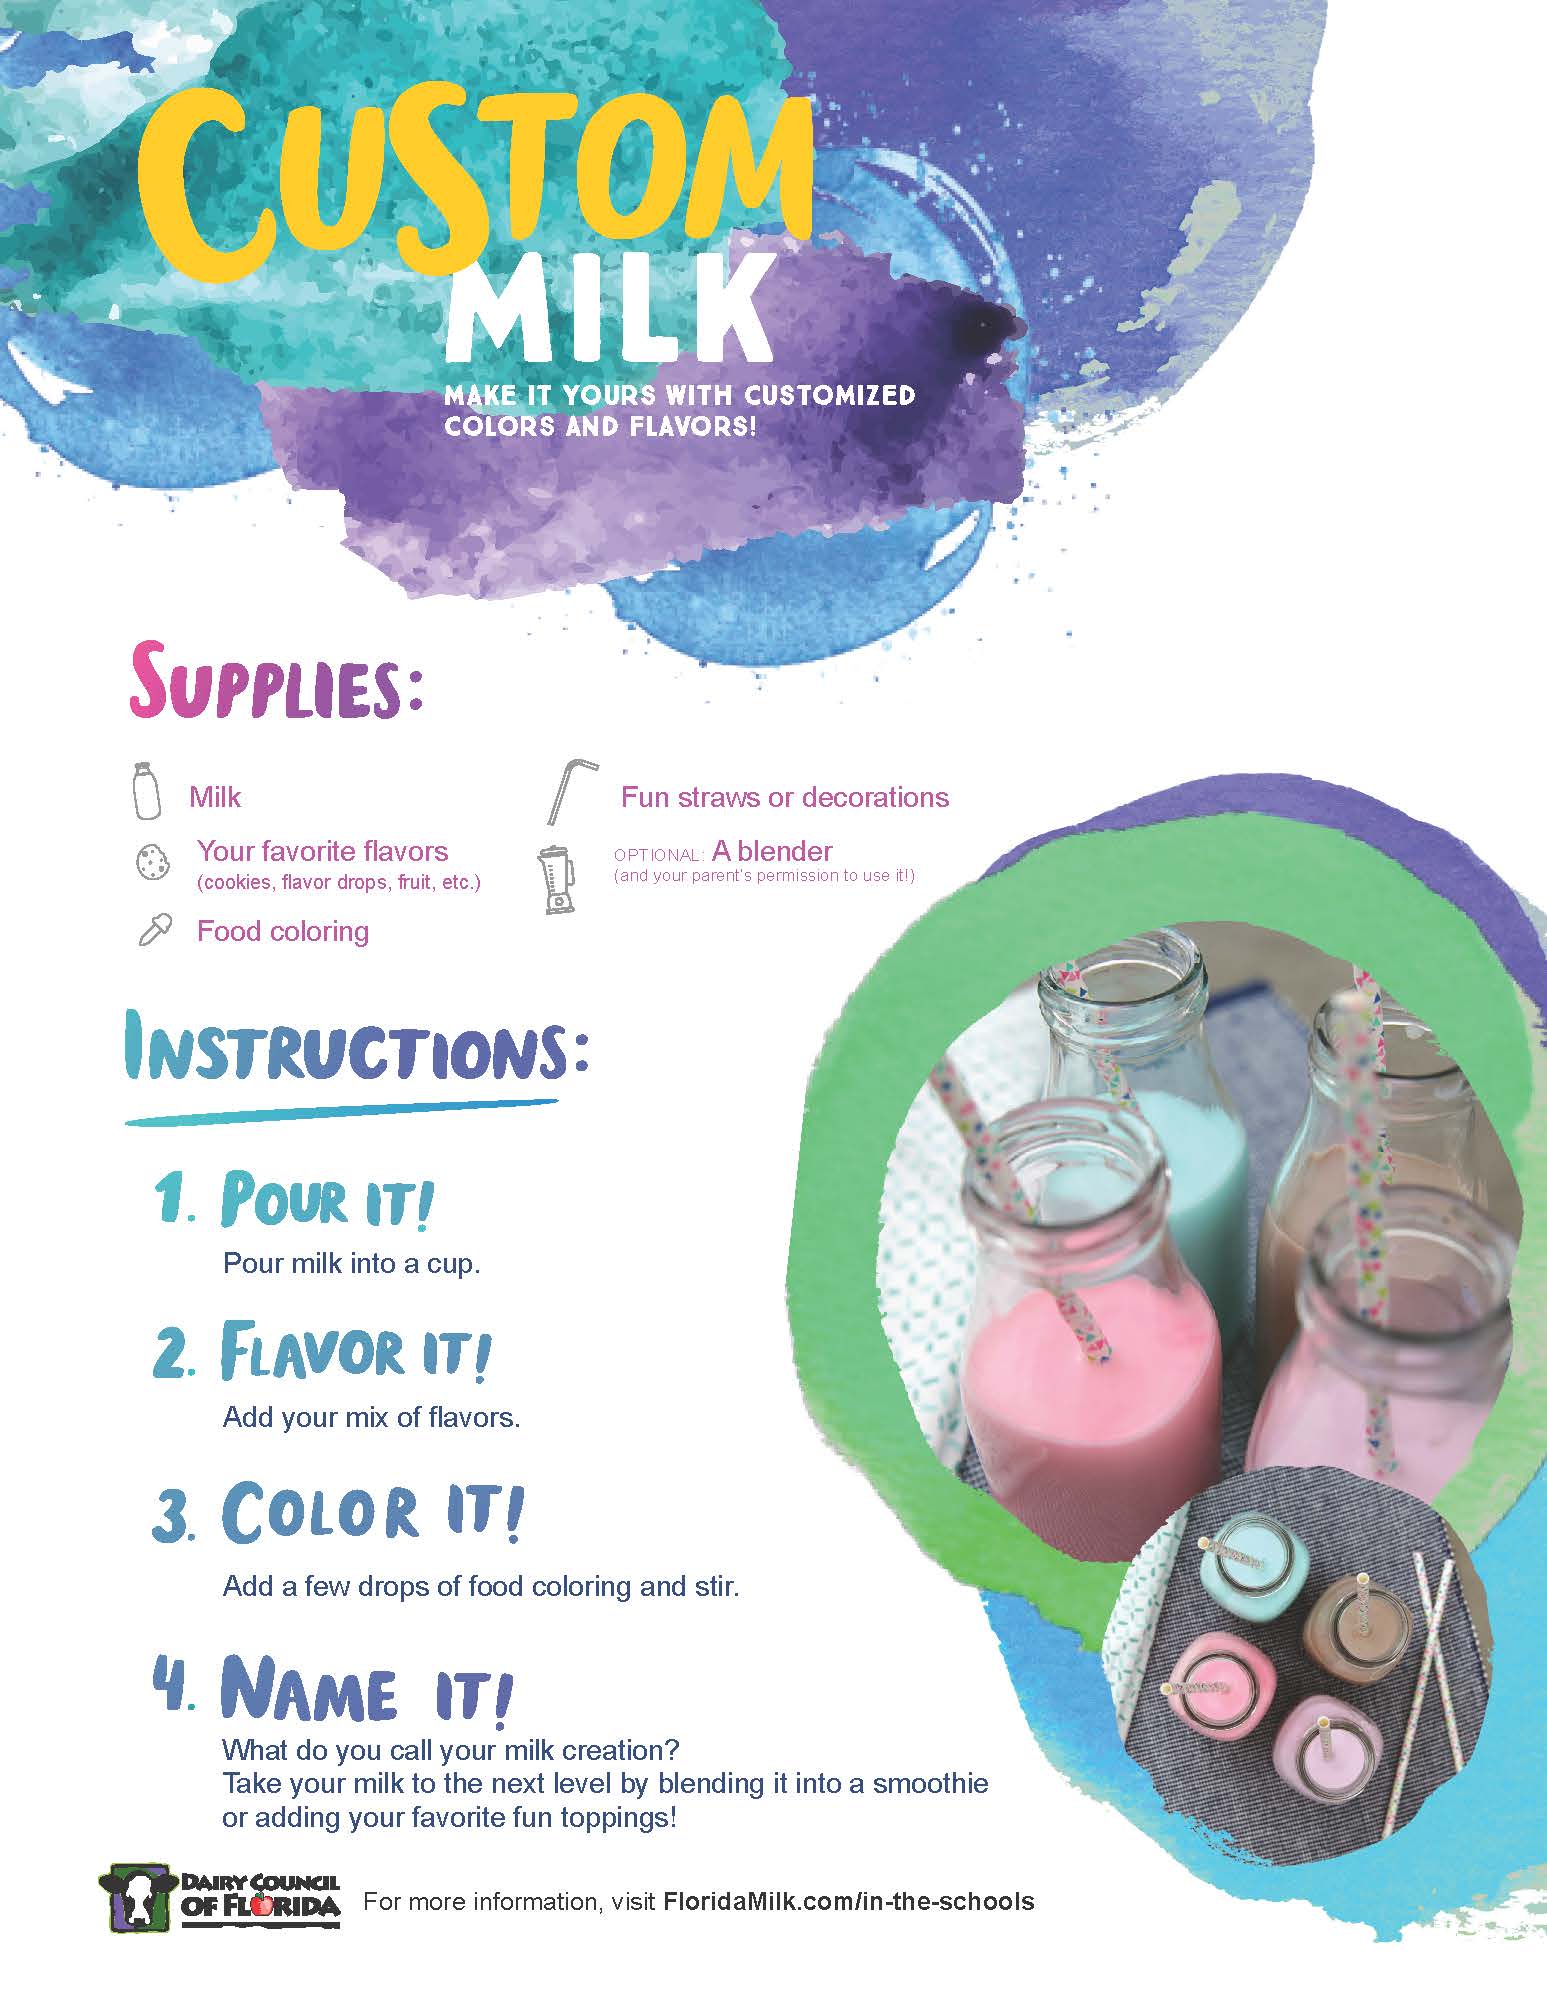 How to Make Custom Milk image